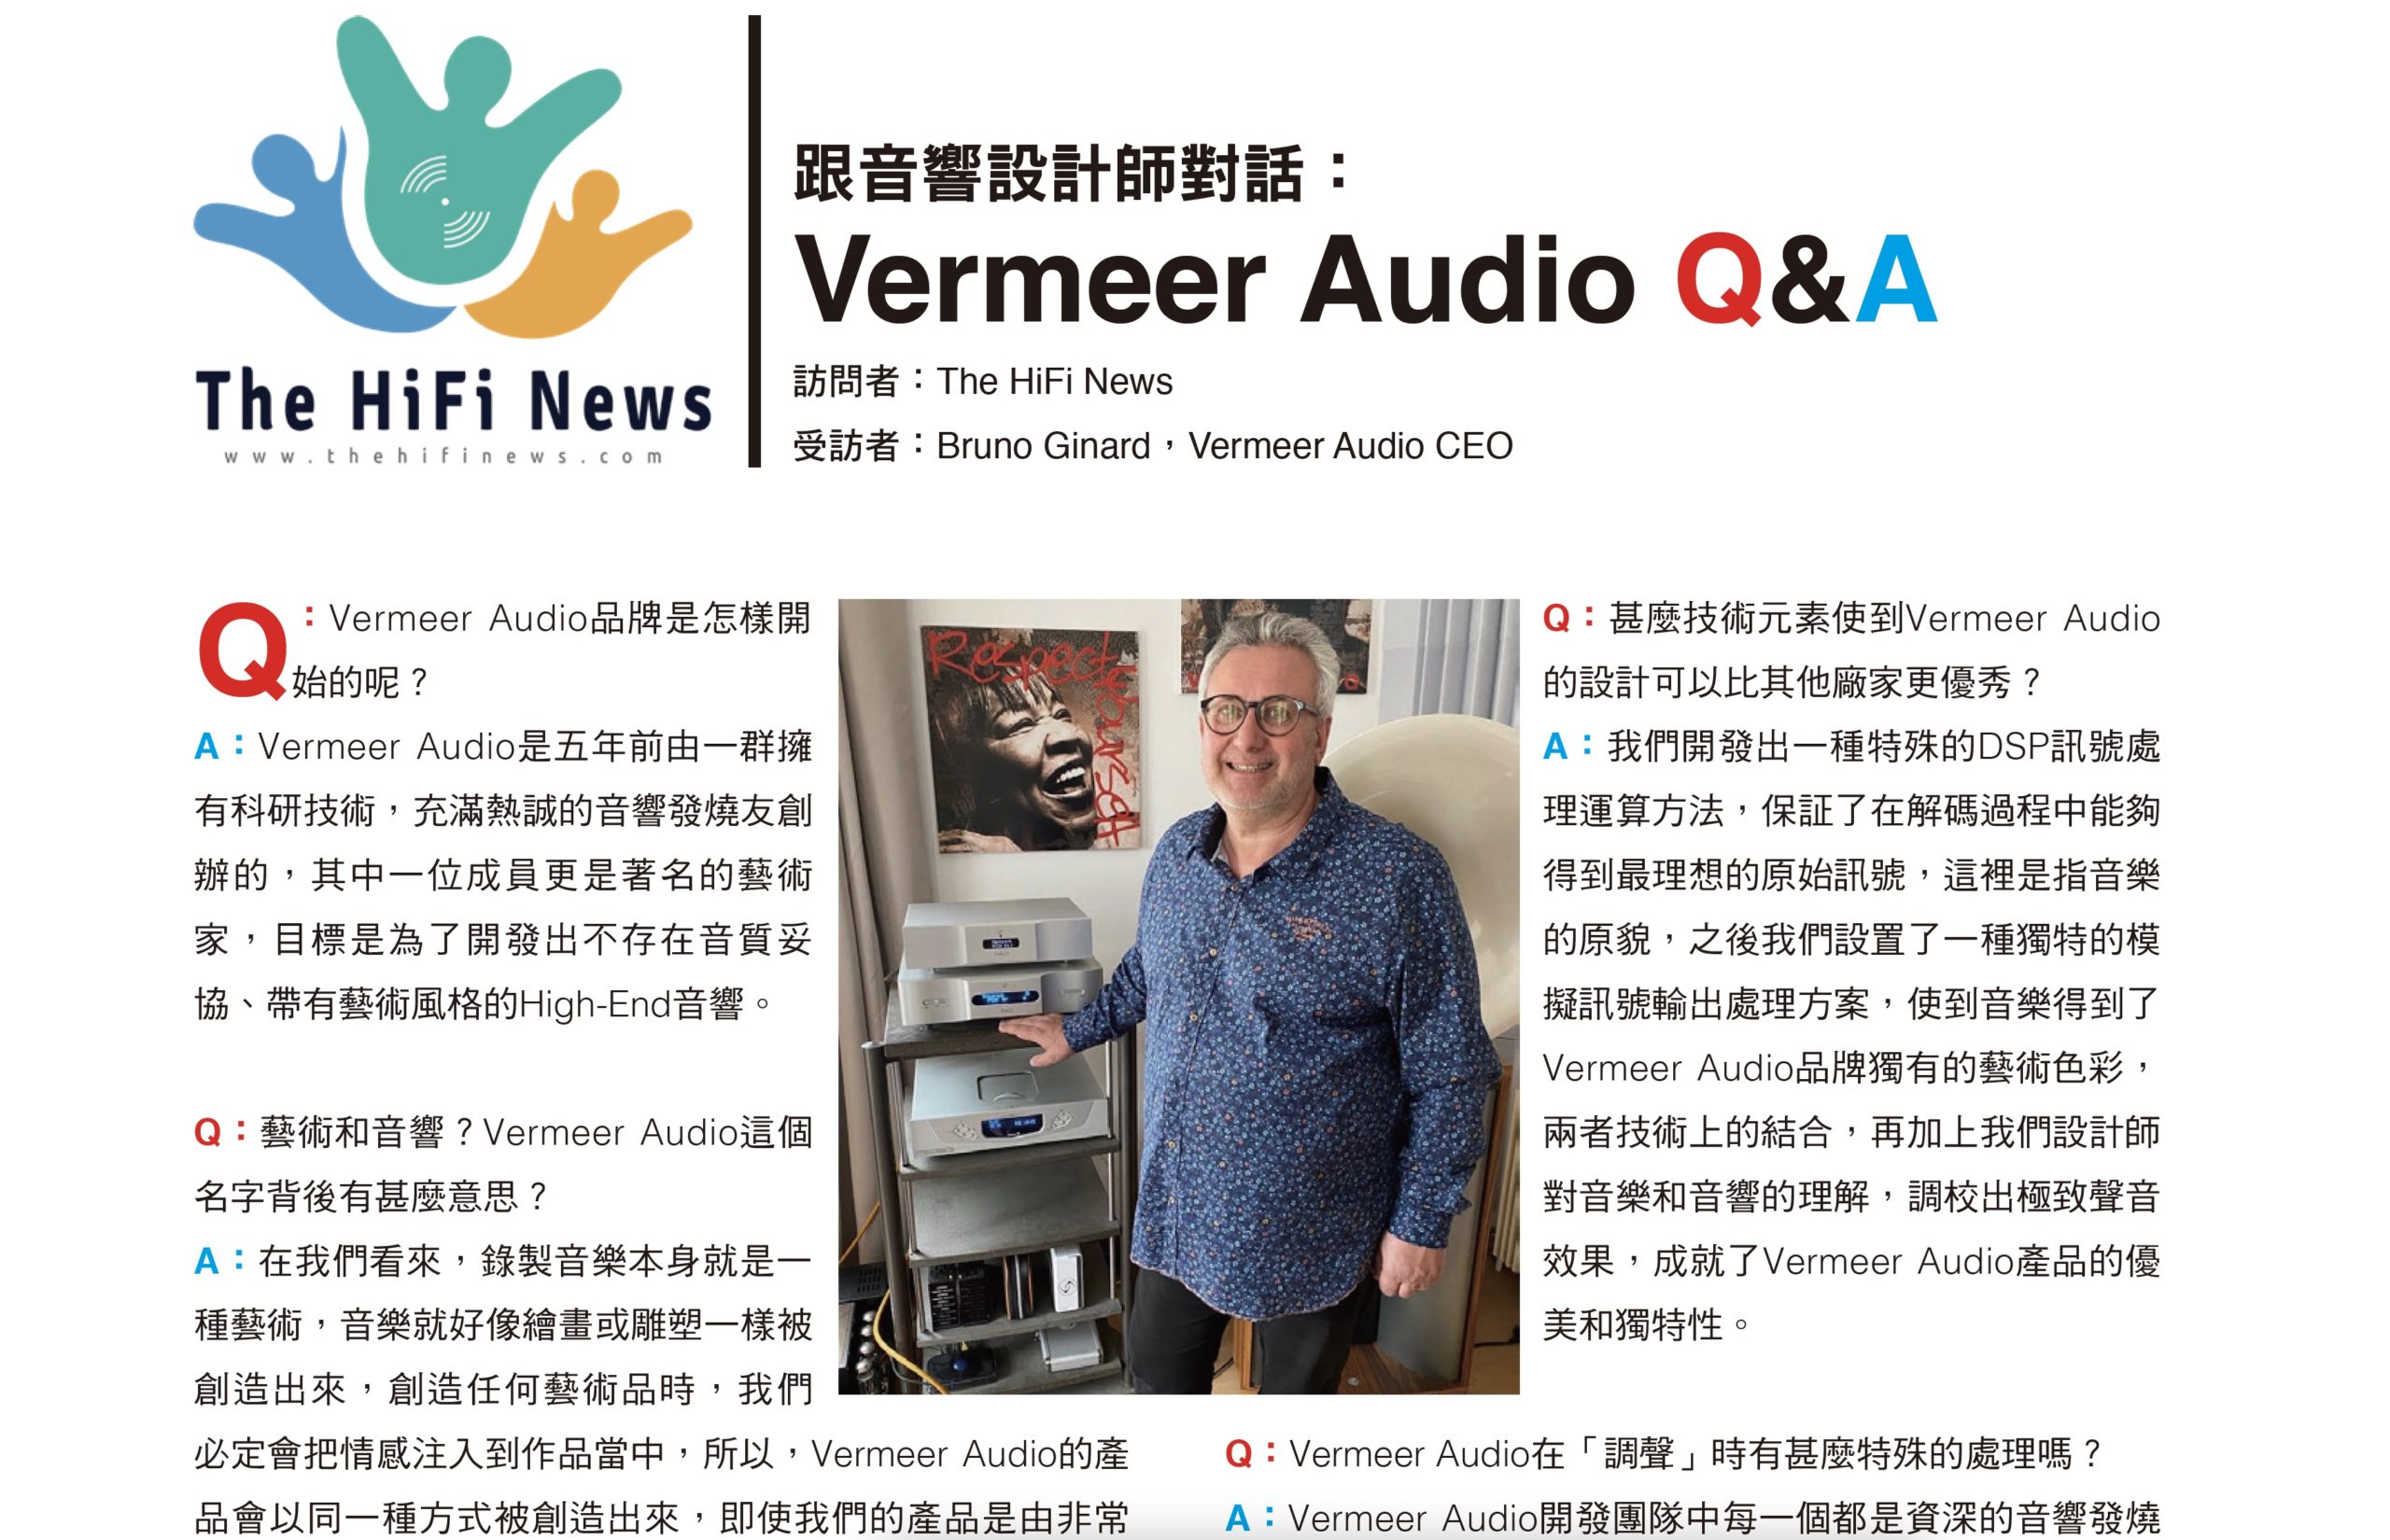 Vermeer Audio Q&A – The Hifi News